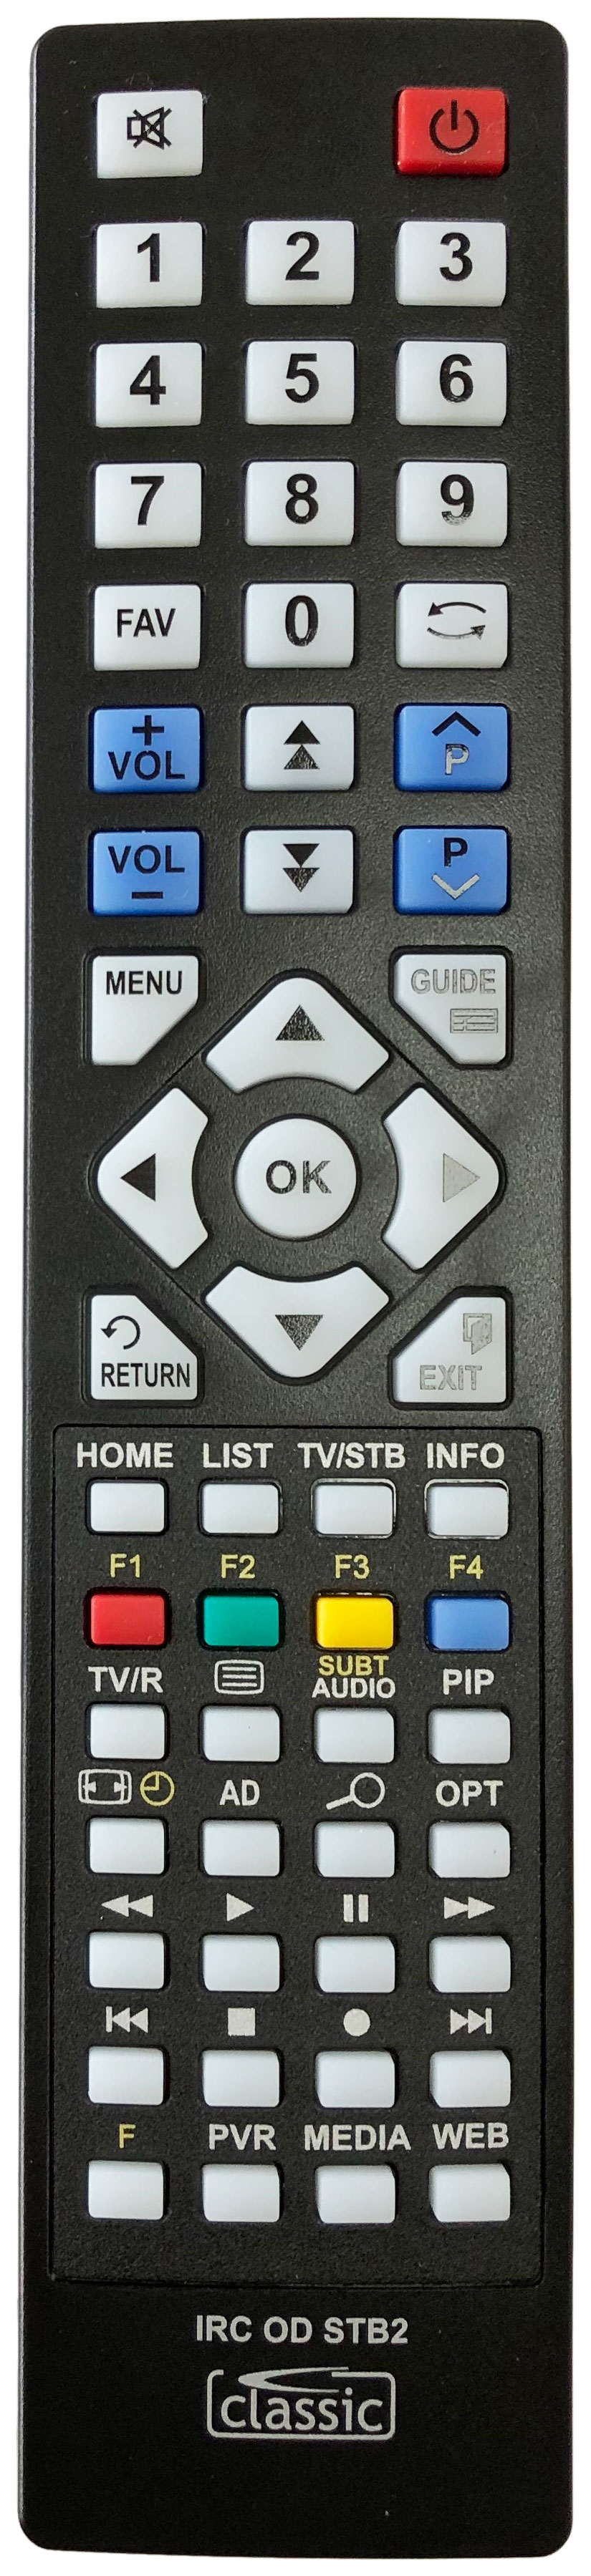 MANHATTAN PLAZA HDR-S Remote Control